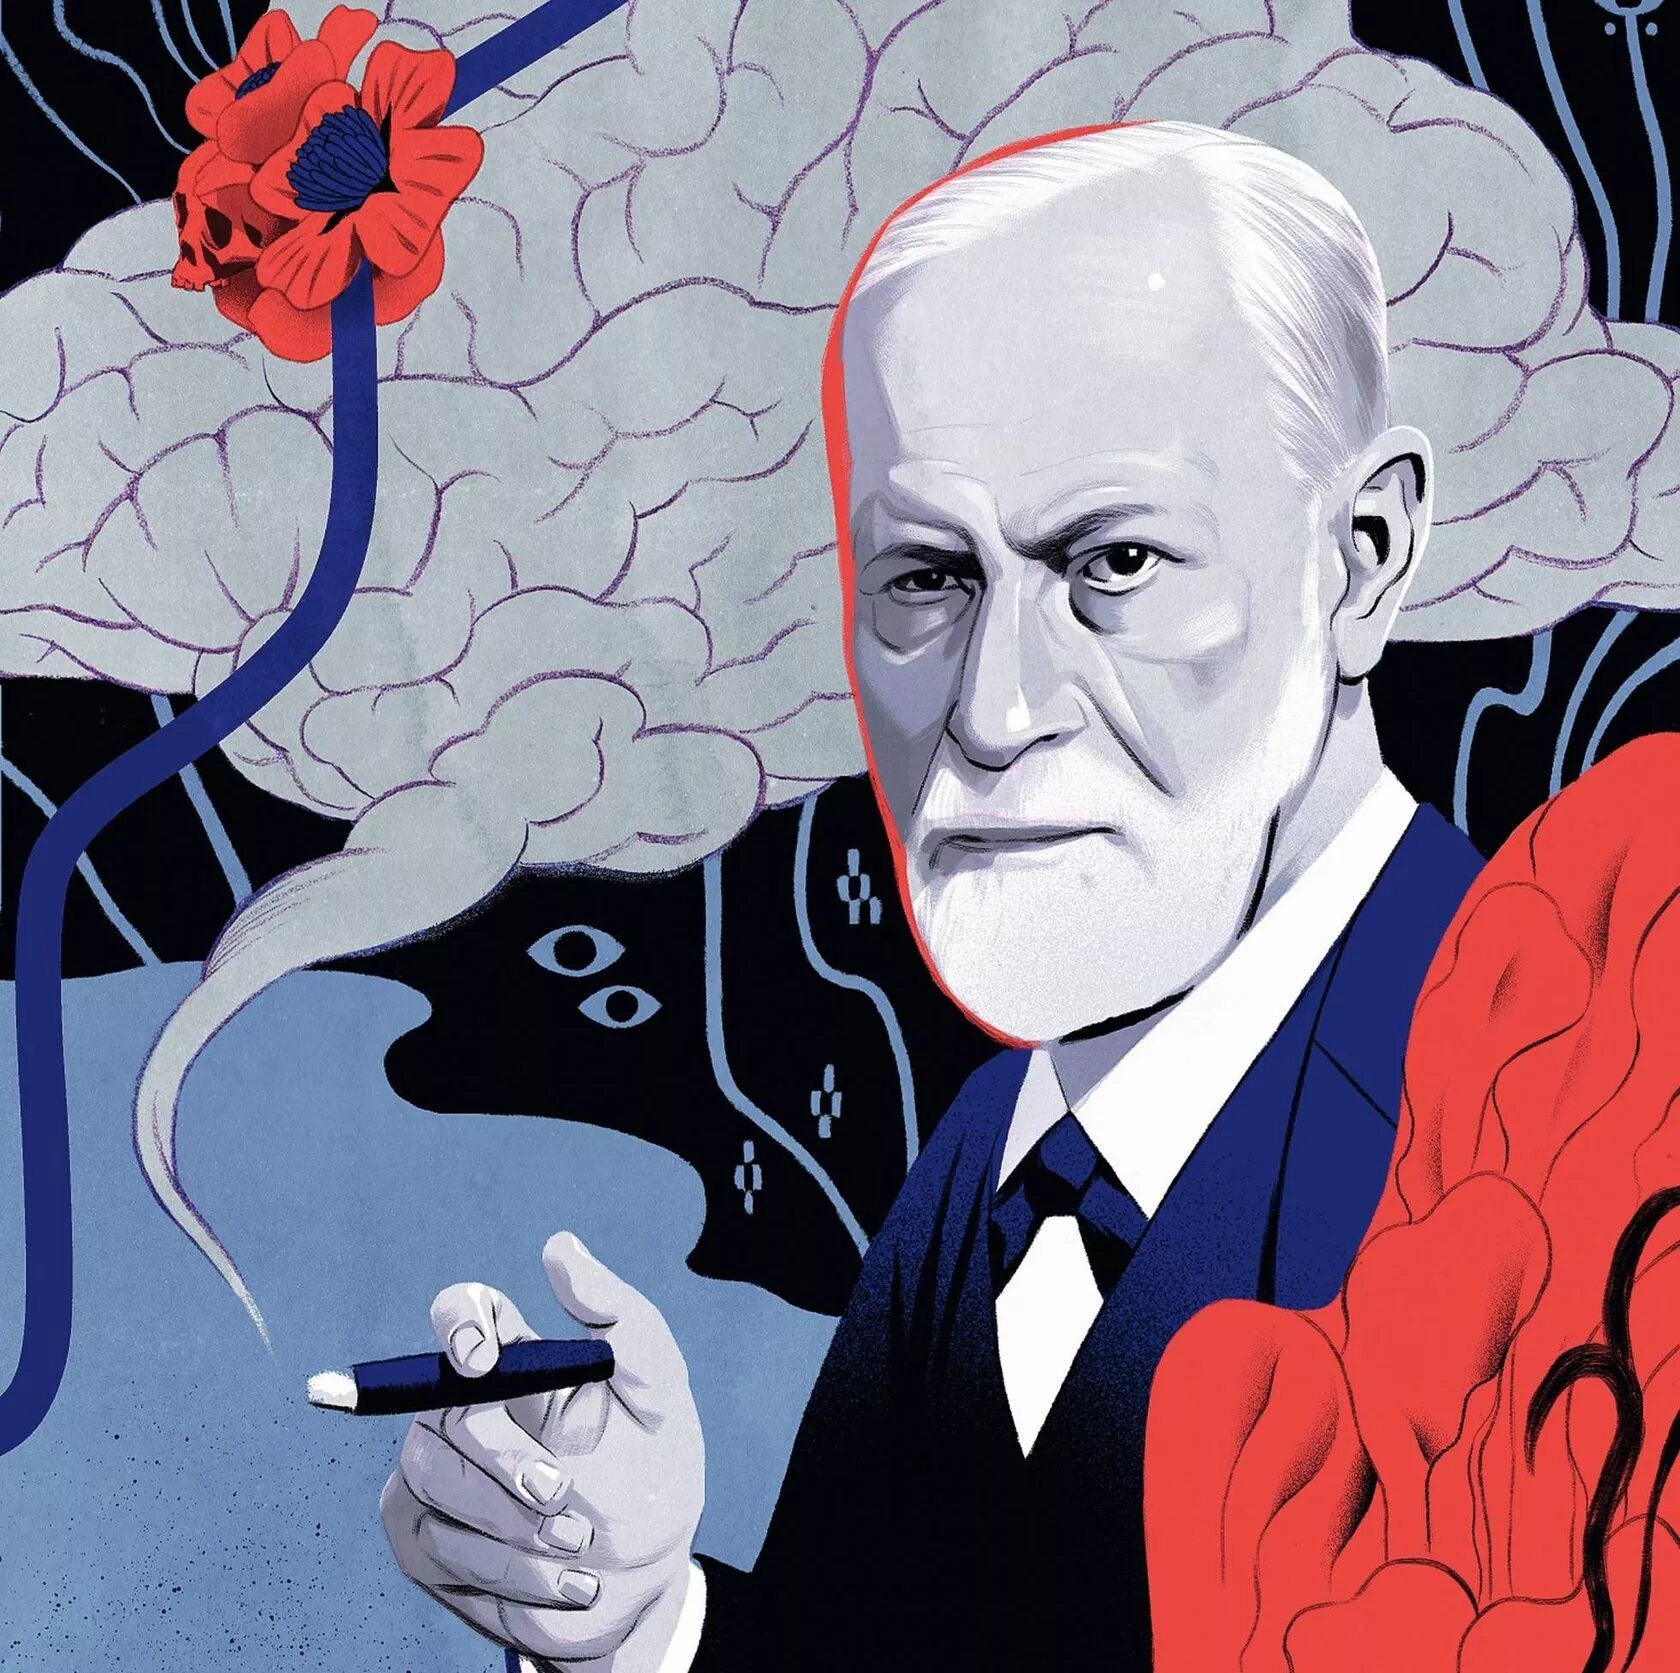 Постер Sigmund Freud. Теория психоанализа Фрейда арт.